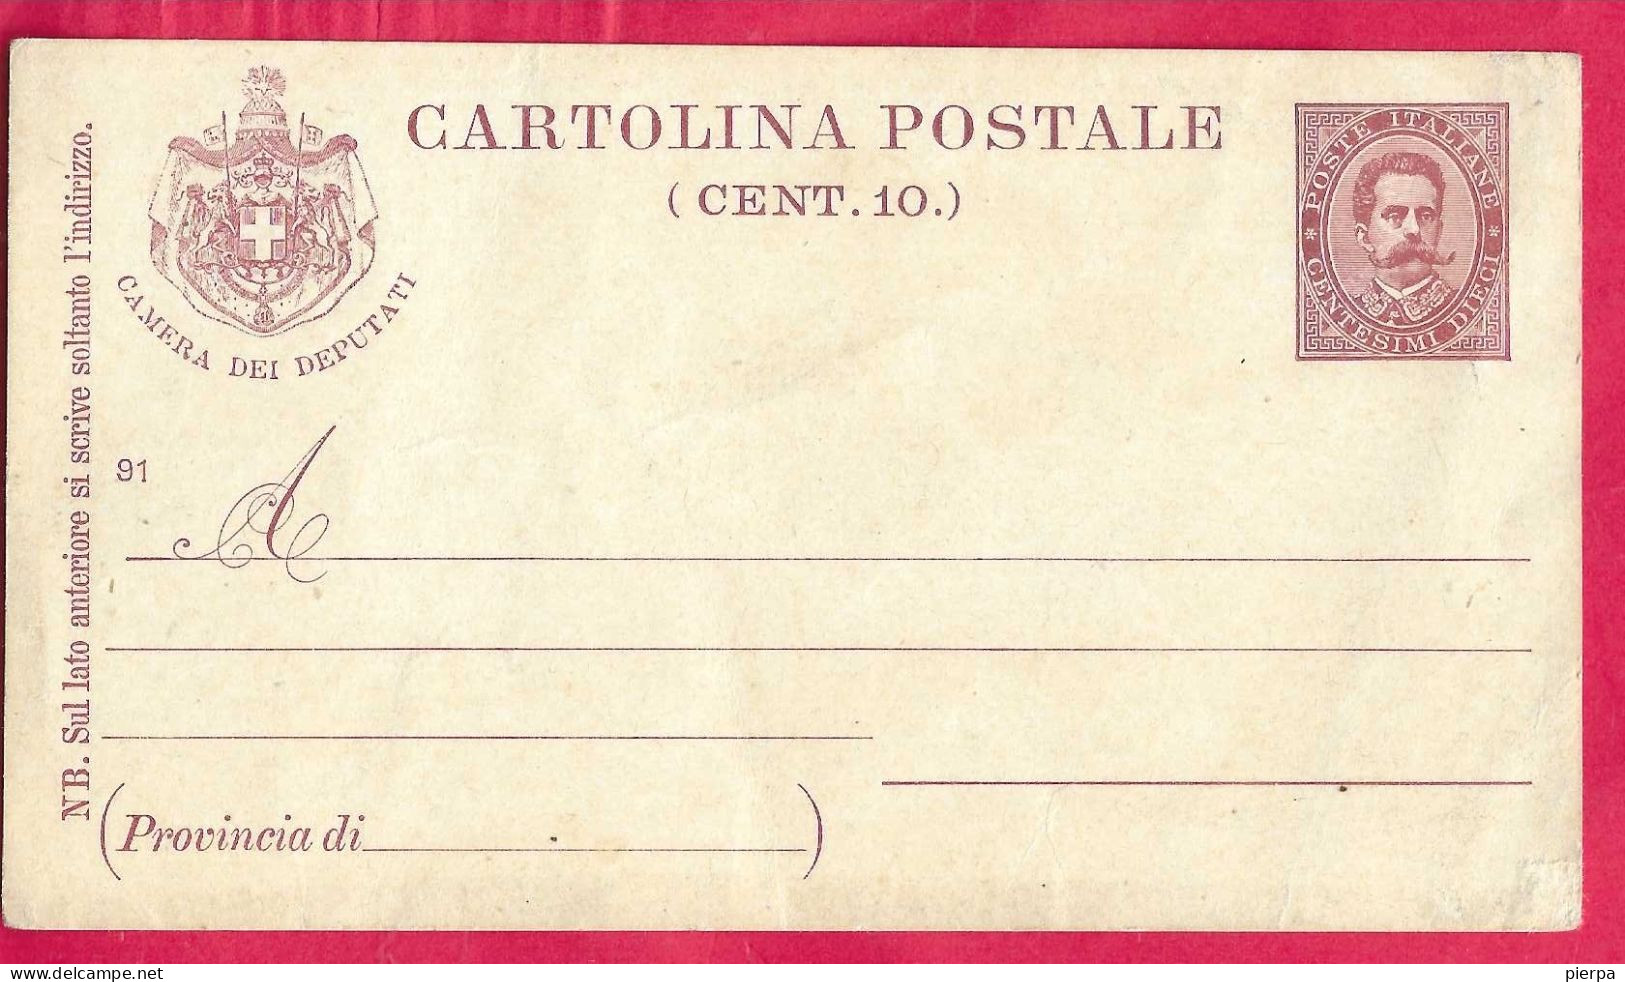 INTERO CARTOLINA POSTALE "CAMERA DEI DEPUTATI" (INT. 17B) - NUOVA - Stamped Stationery